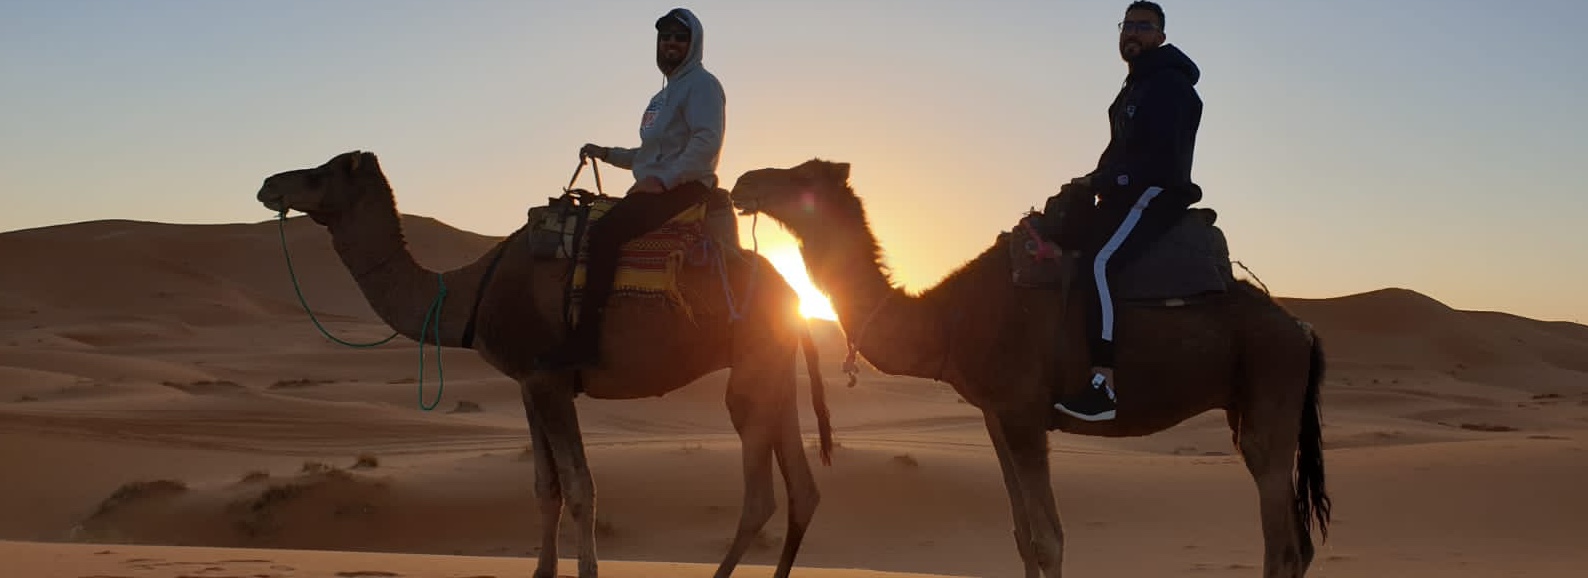 2 guys on camels in the desert